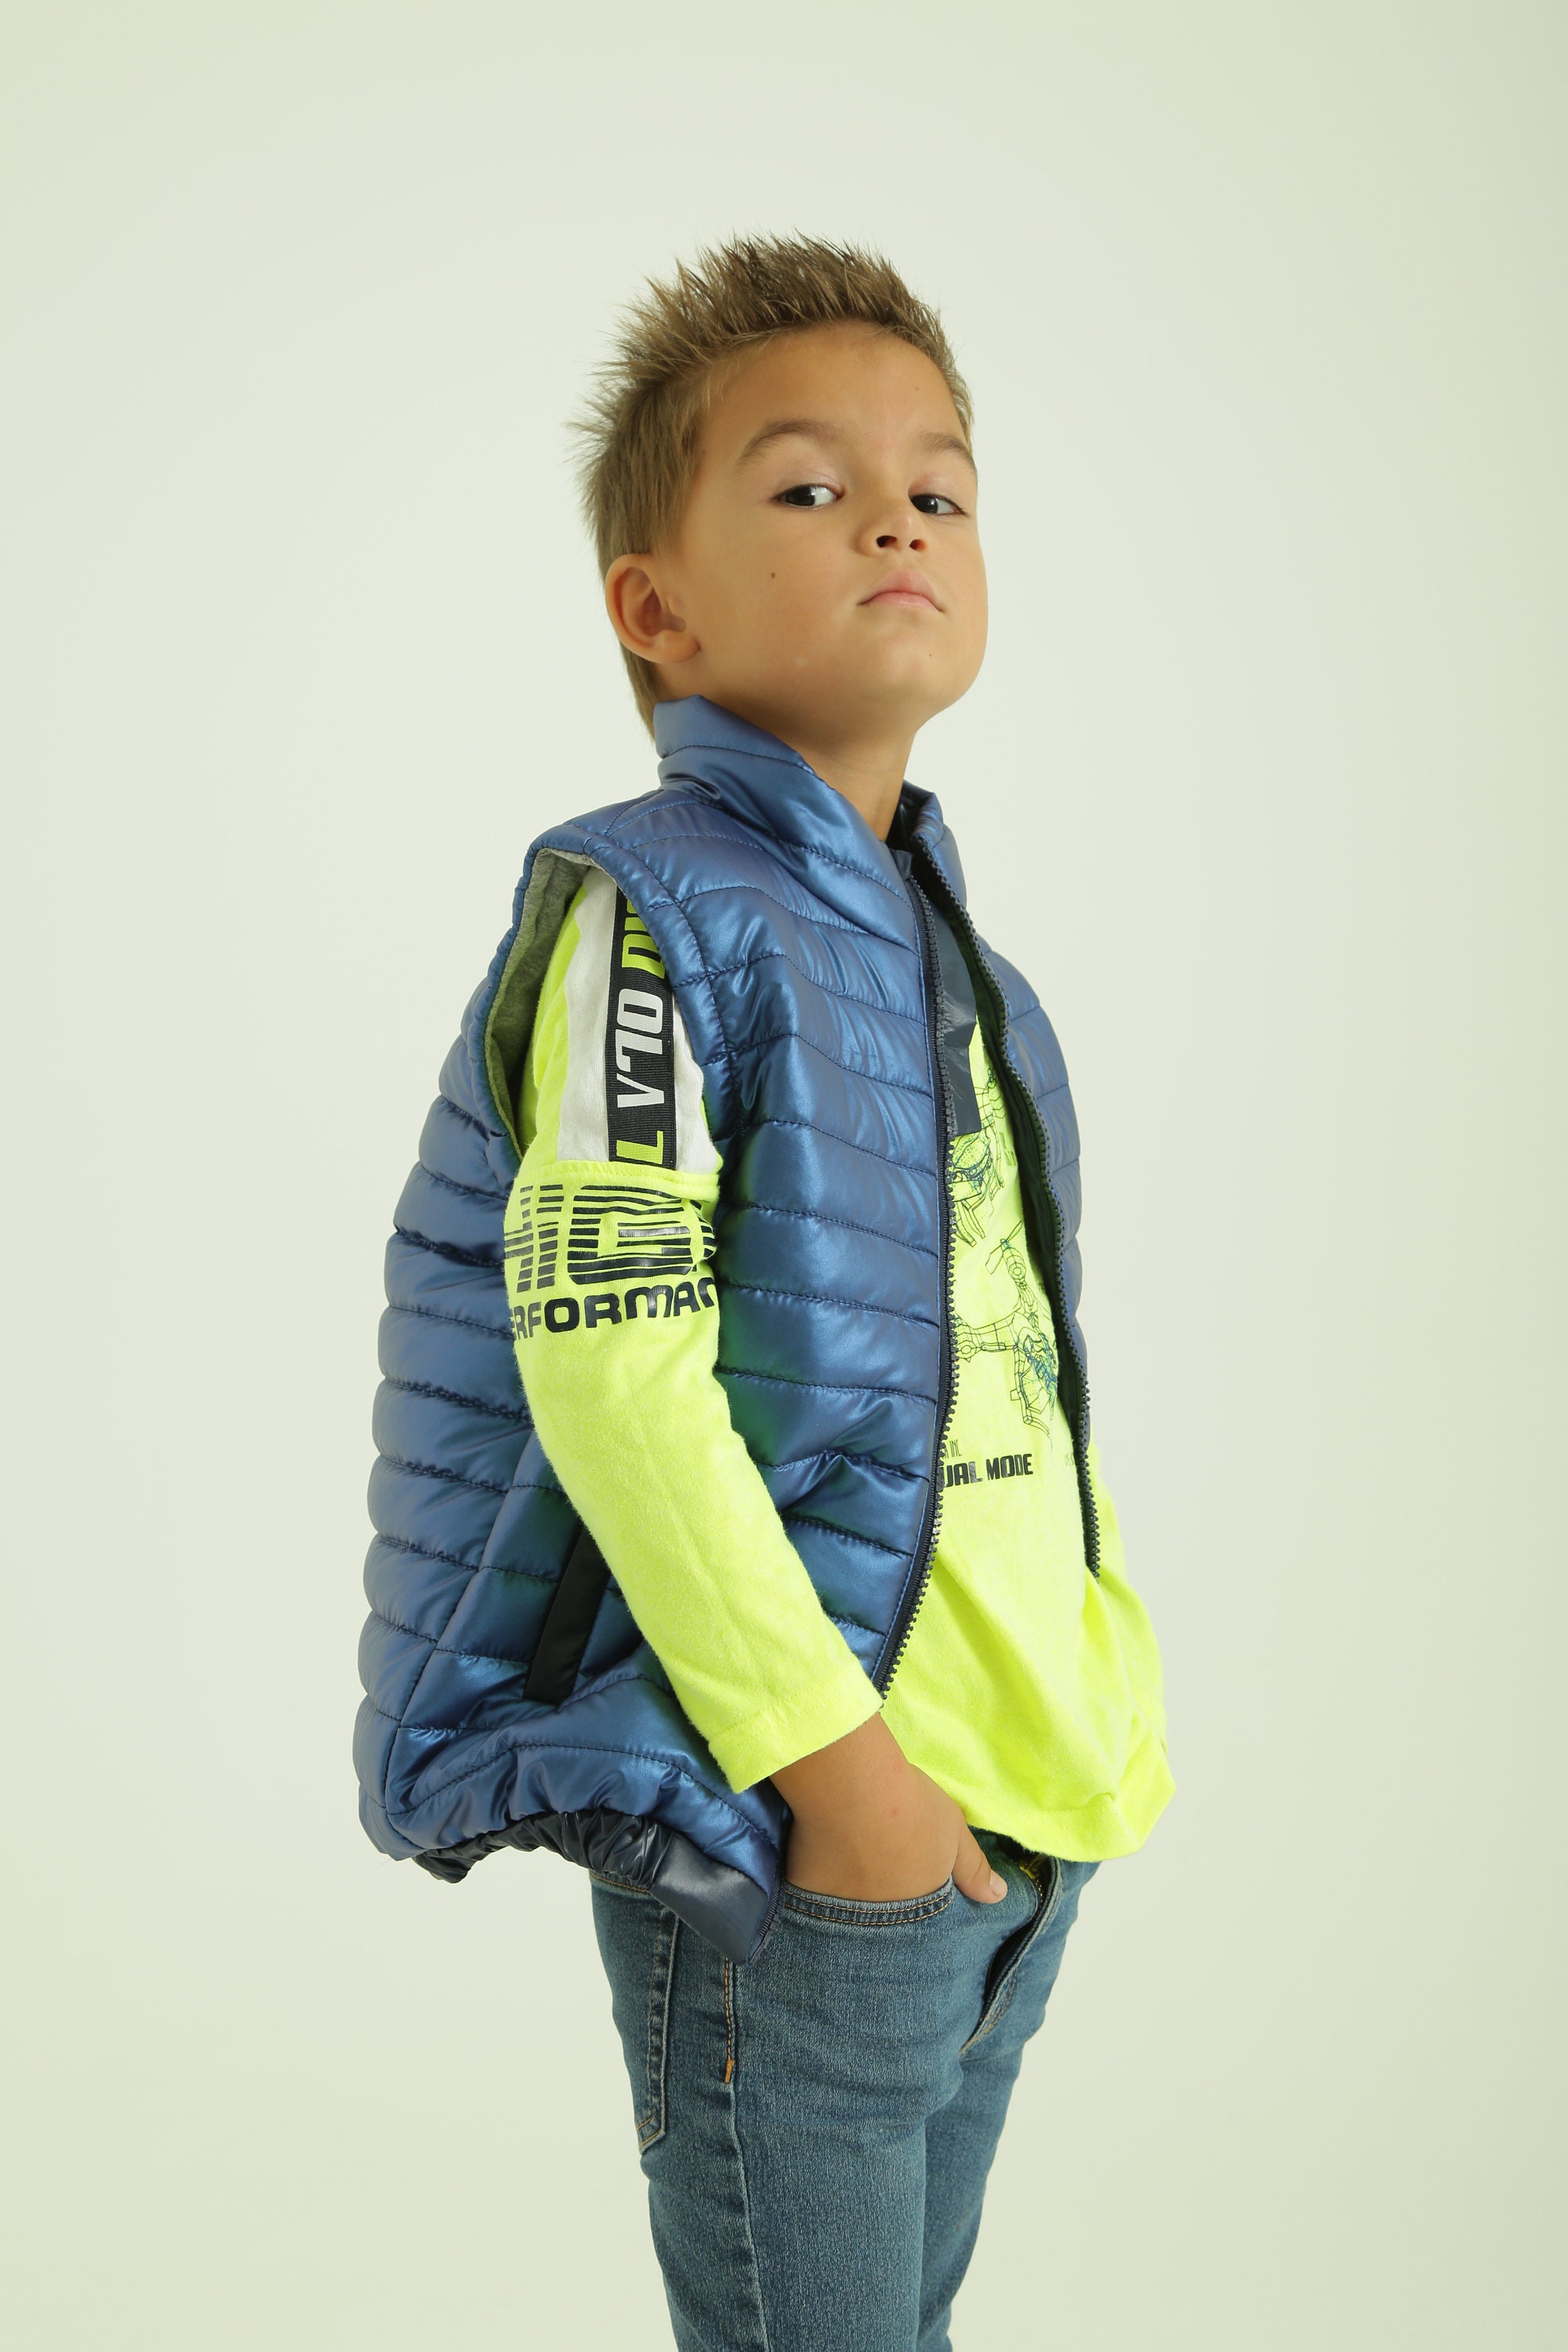 Sleeveless Jacket Hemp Quilted Vest Kids Children Hemp Fiber - Etsy